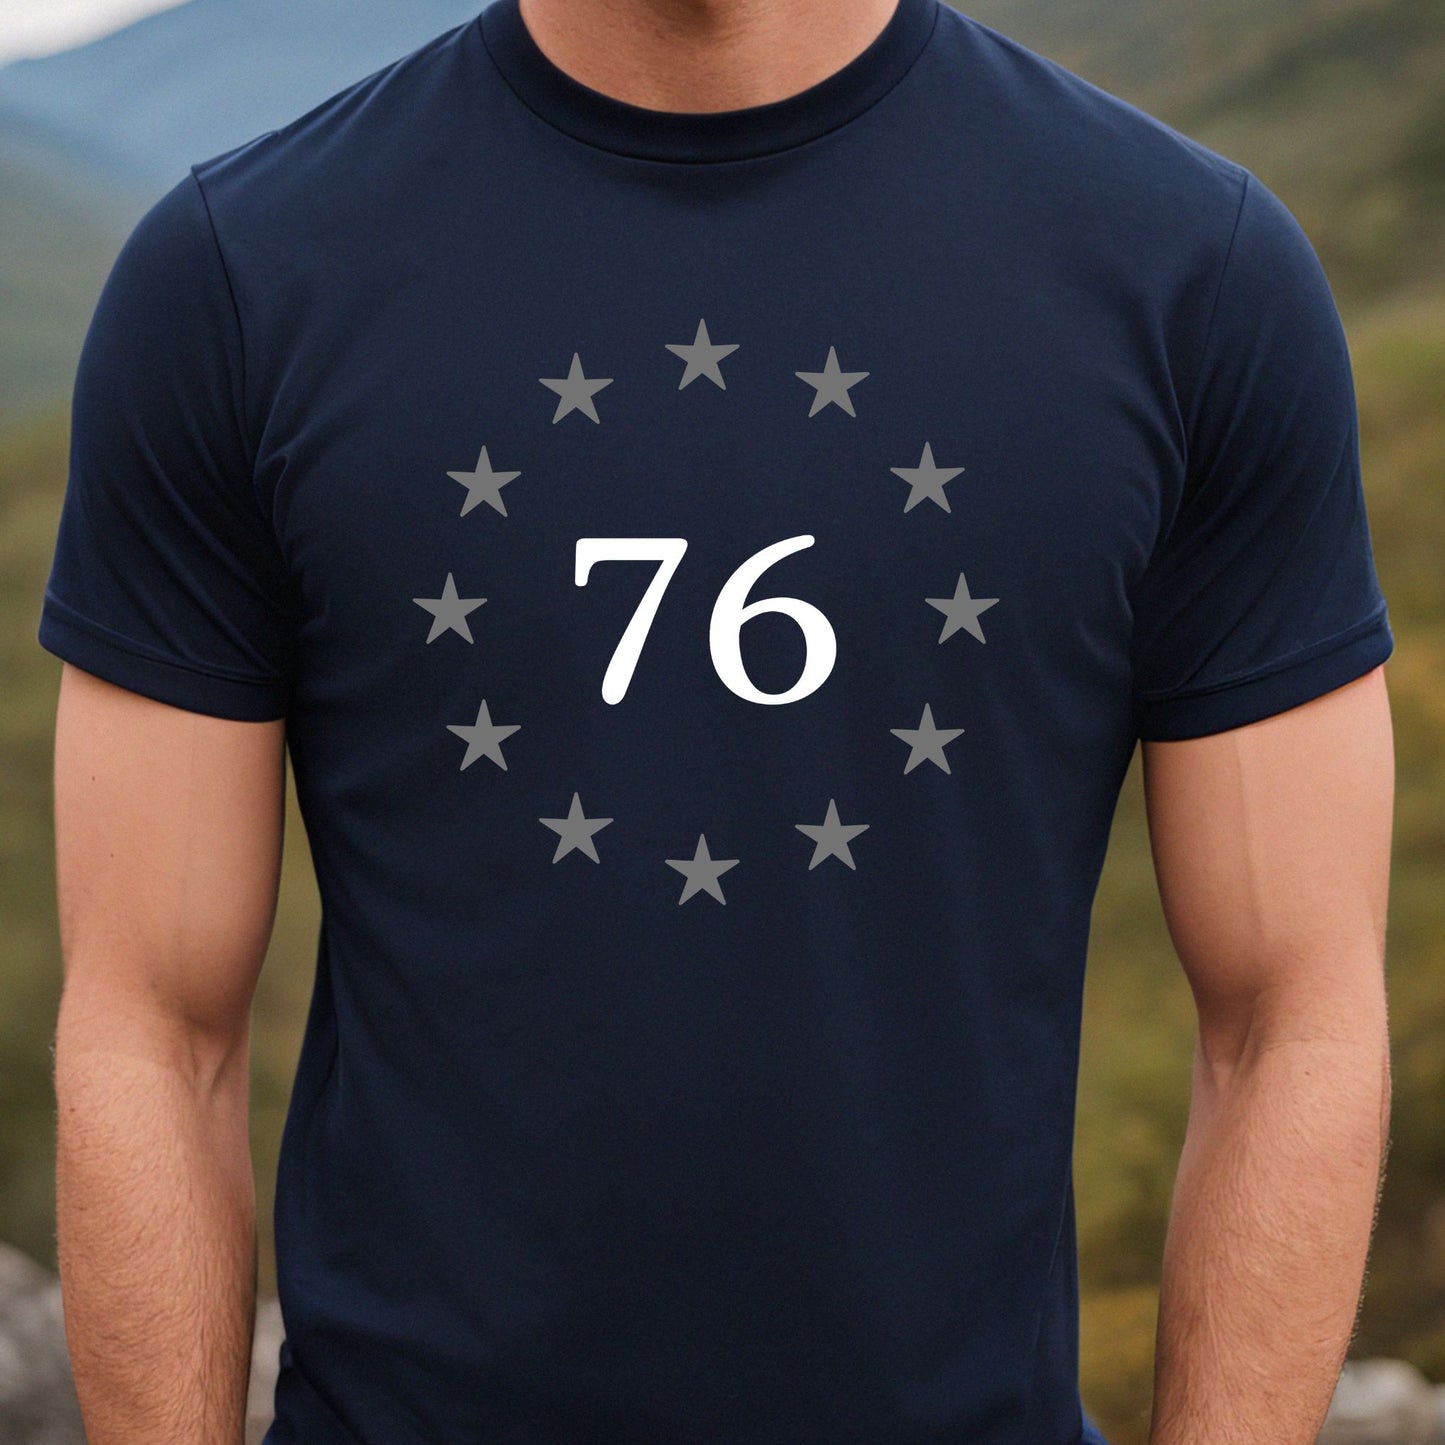 Rakkgear 76 Stars Short Sleeve Tee in navy blue